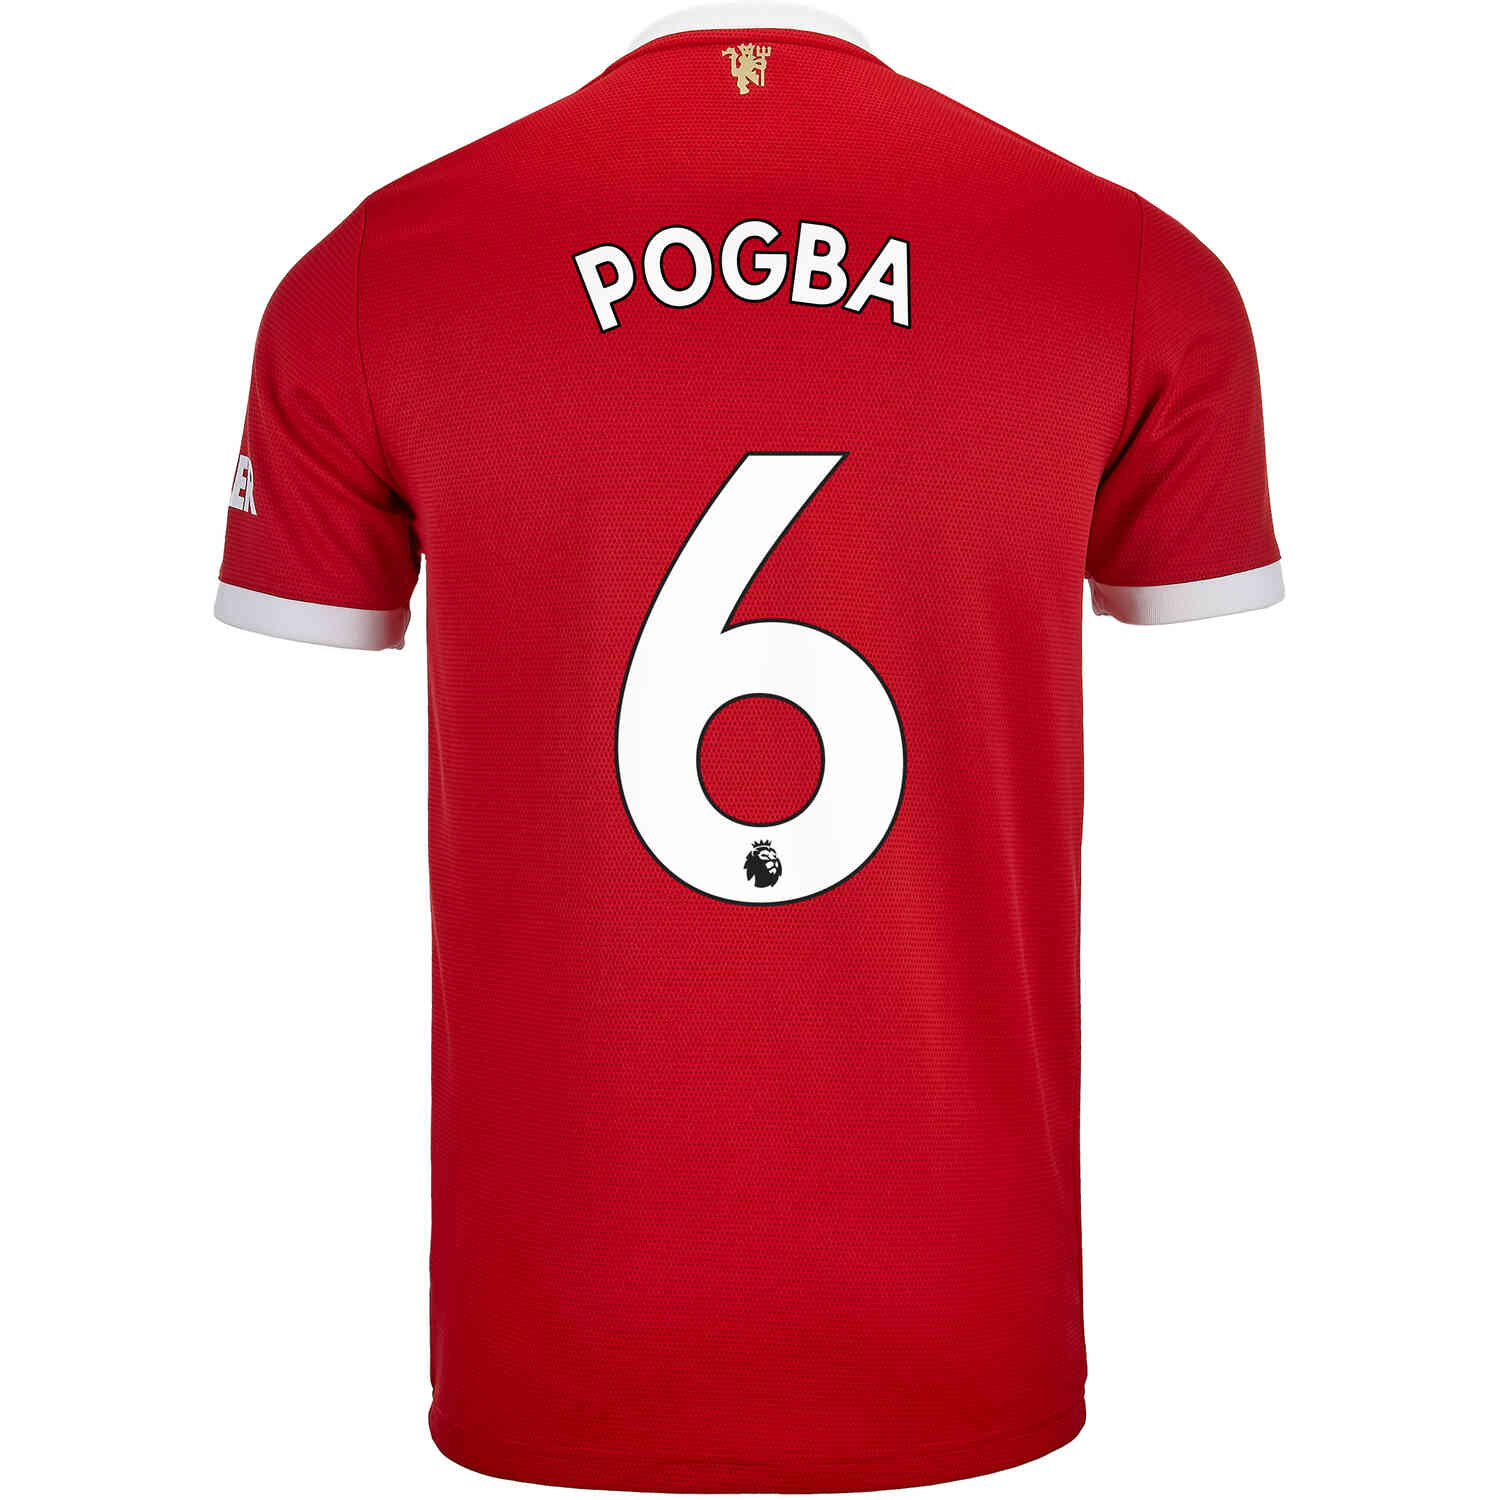 2021/22 adidas Paul Pogba Manchester United Jersey -